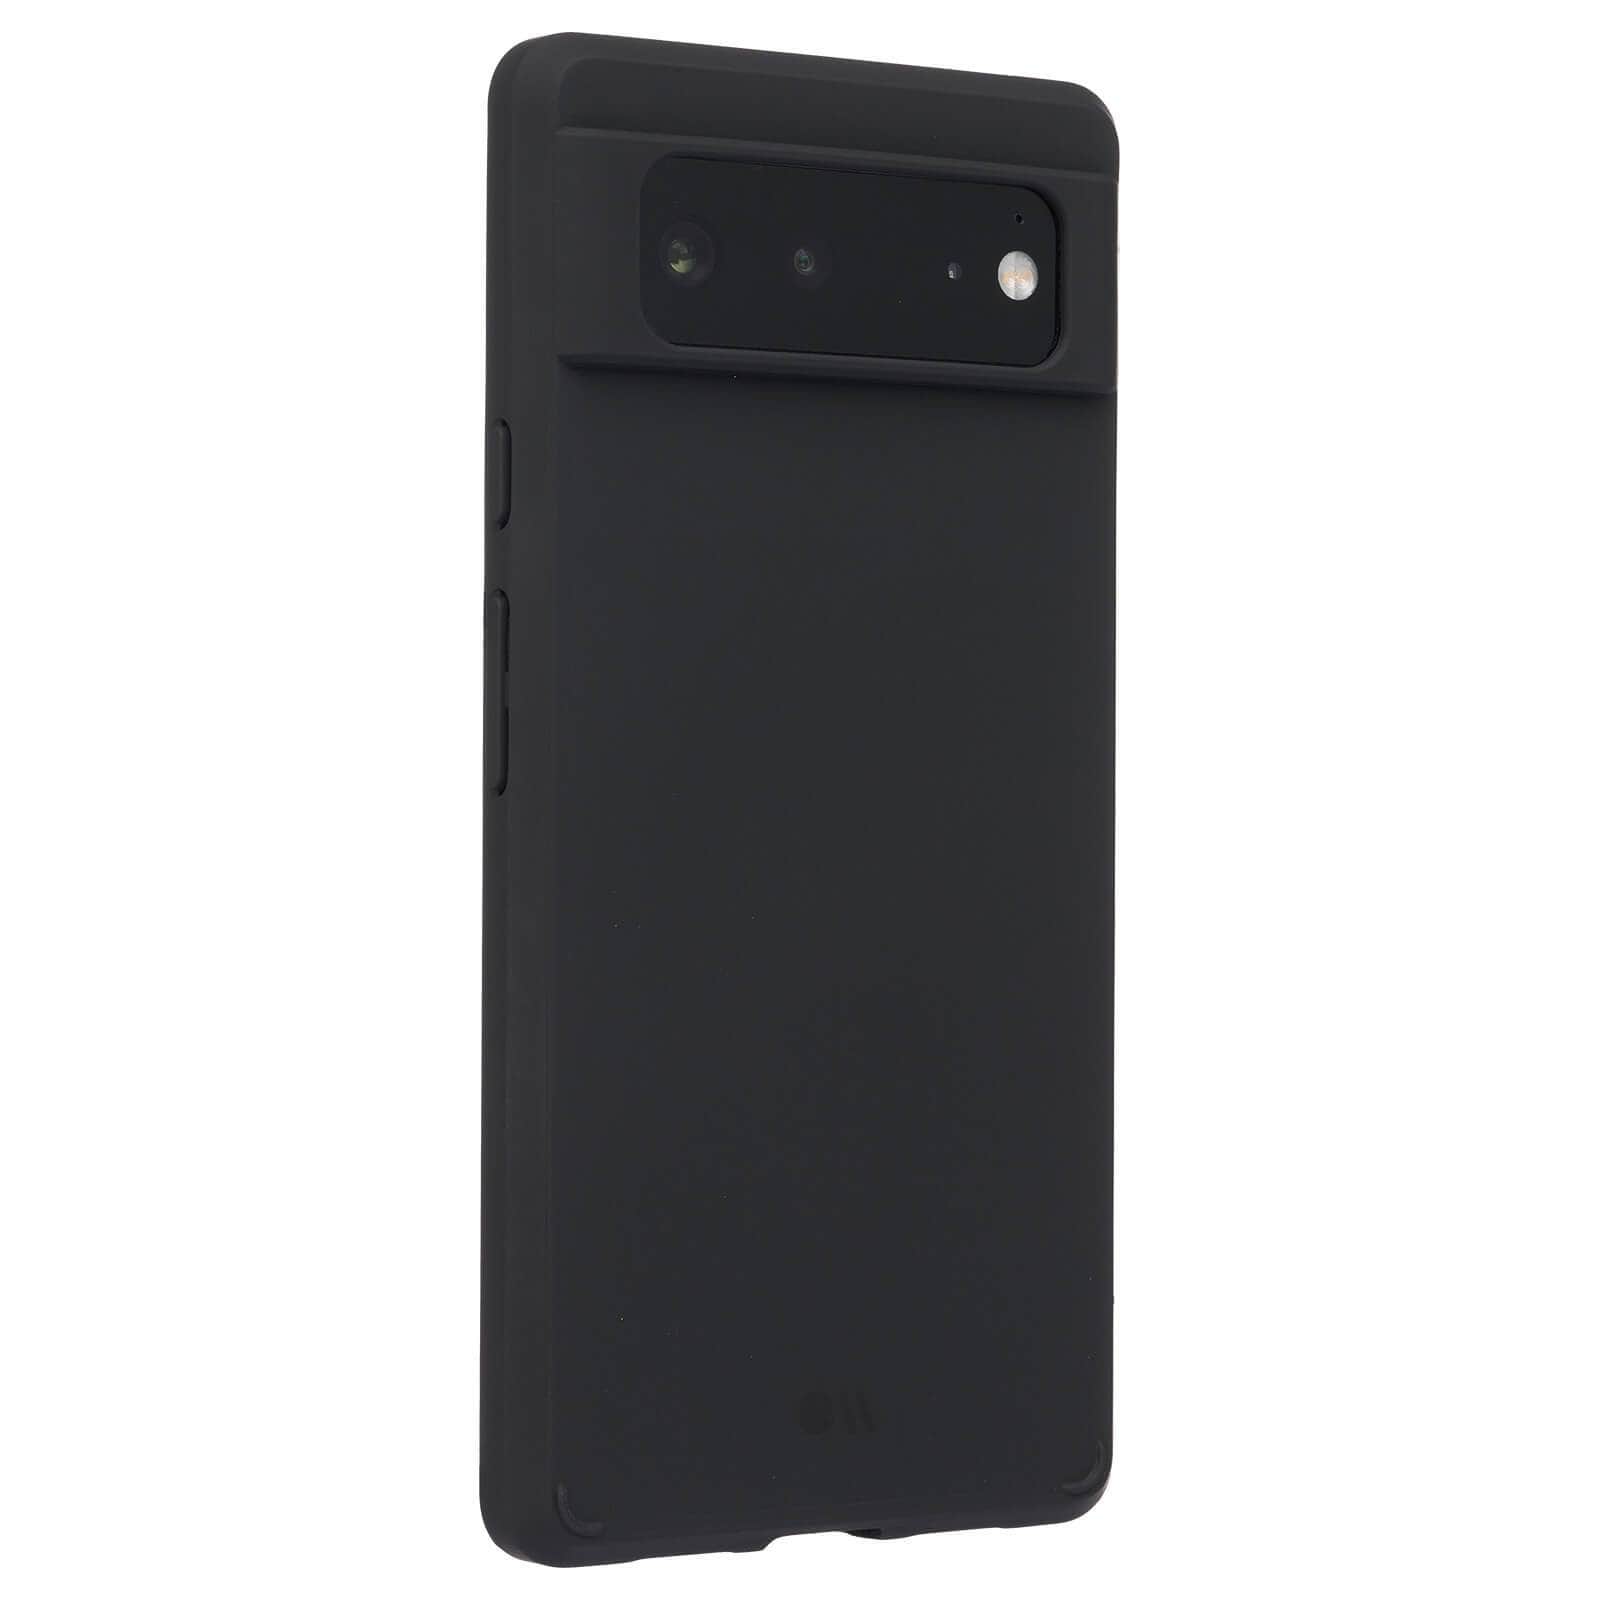 Tough black protective case for the Google Pixel 6. color::Black